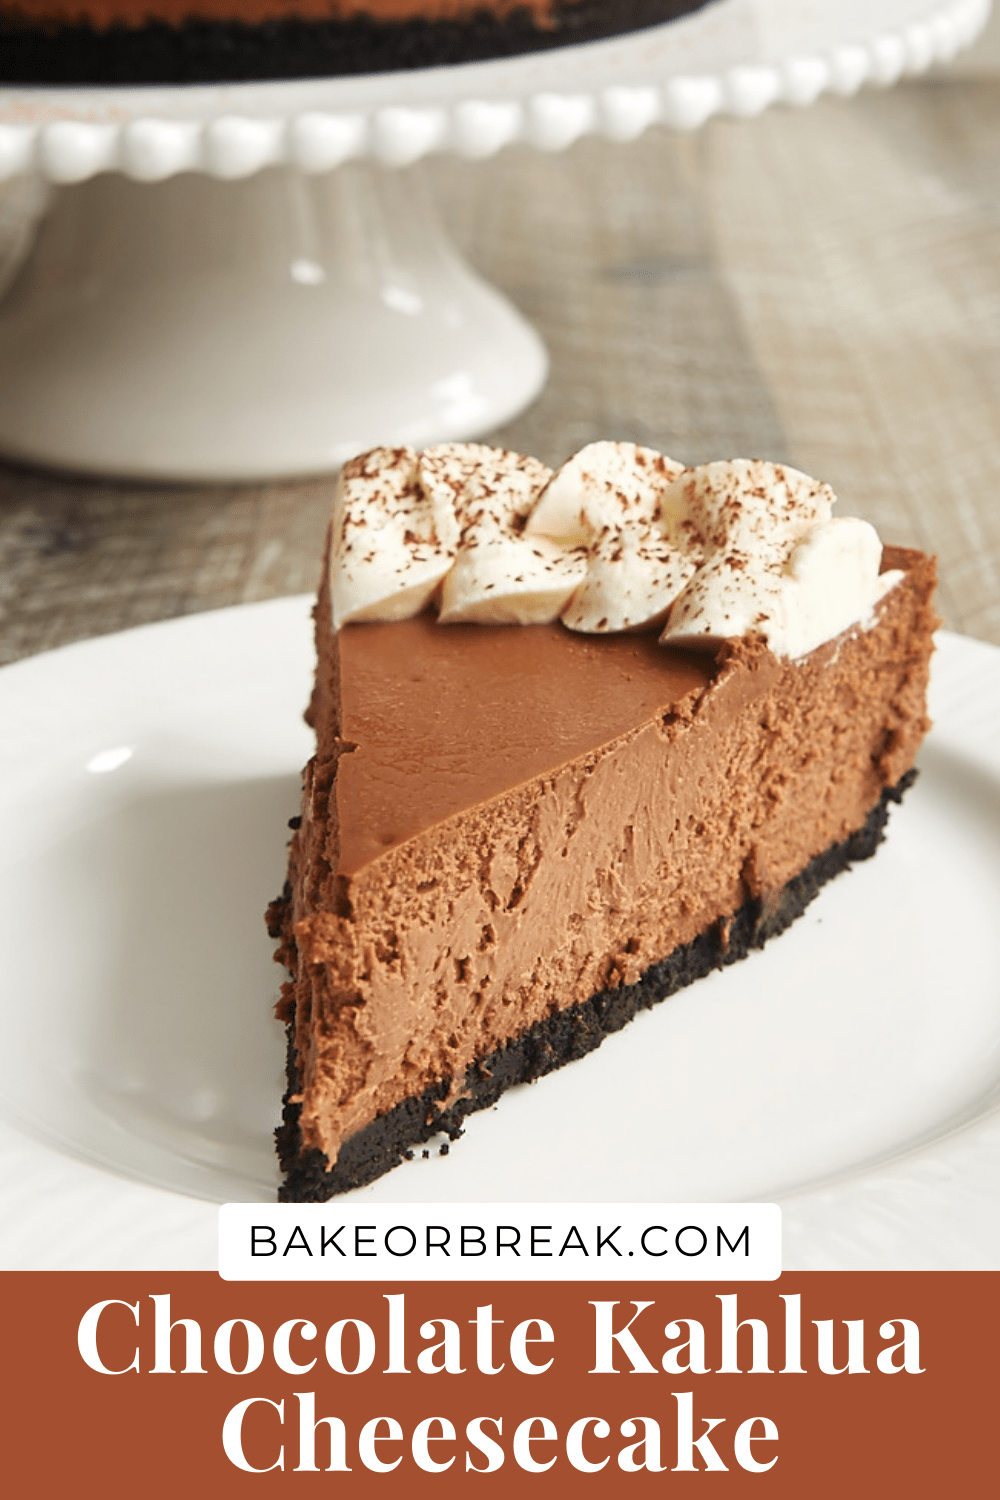 Chocolate Kahlua Cheesecake bakeorbreak.com